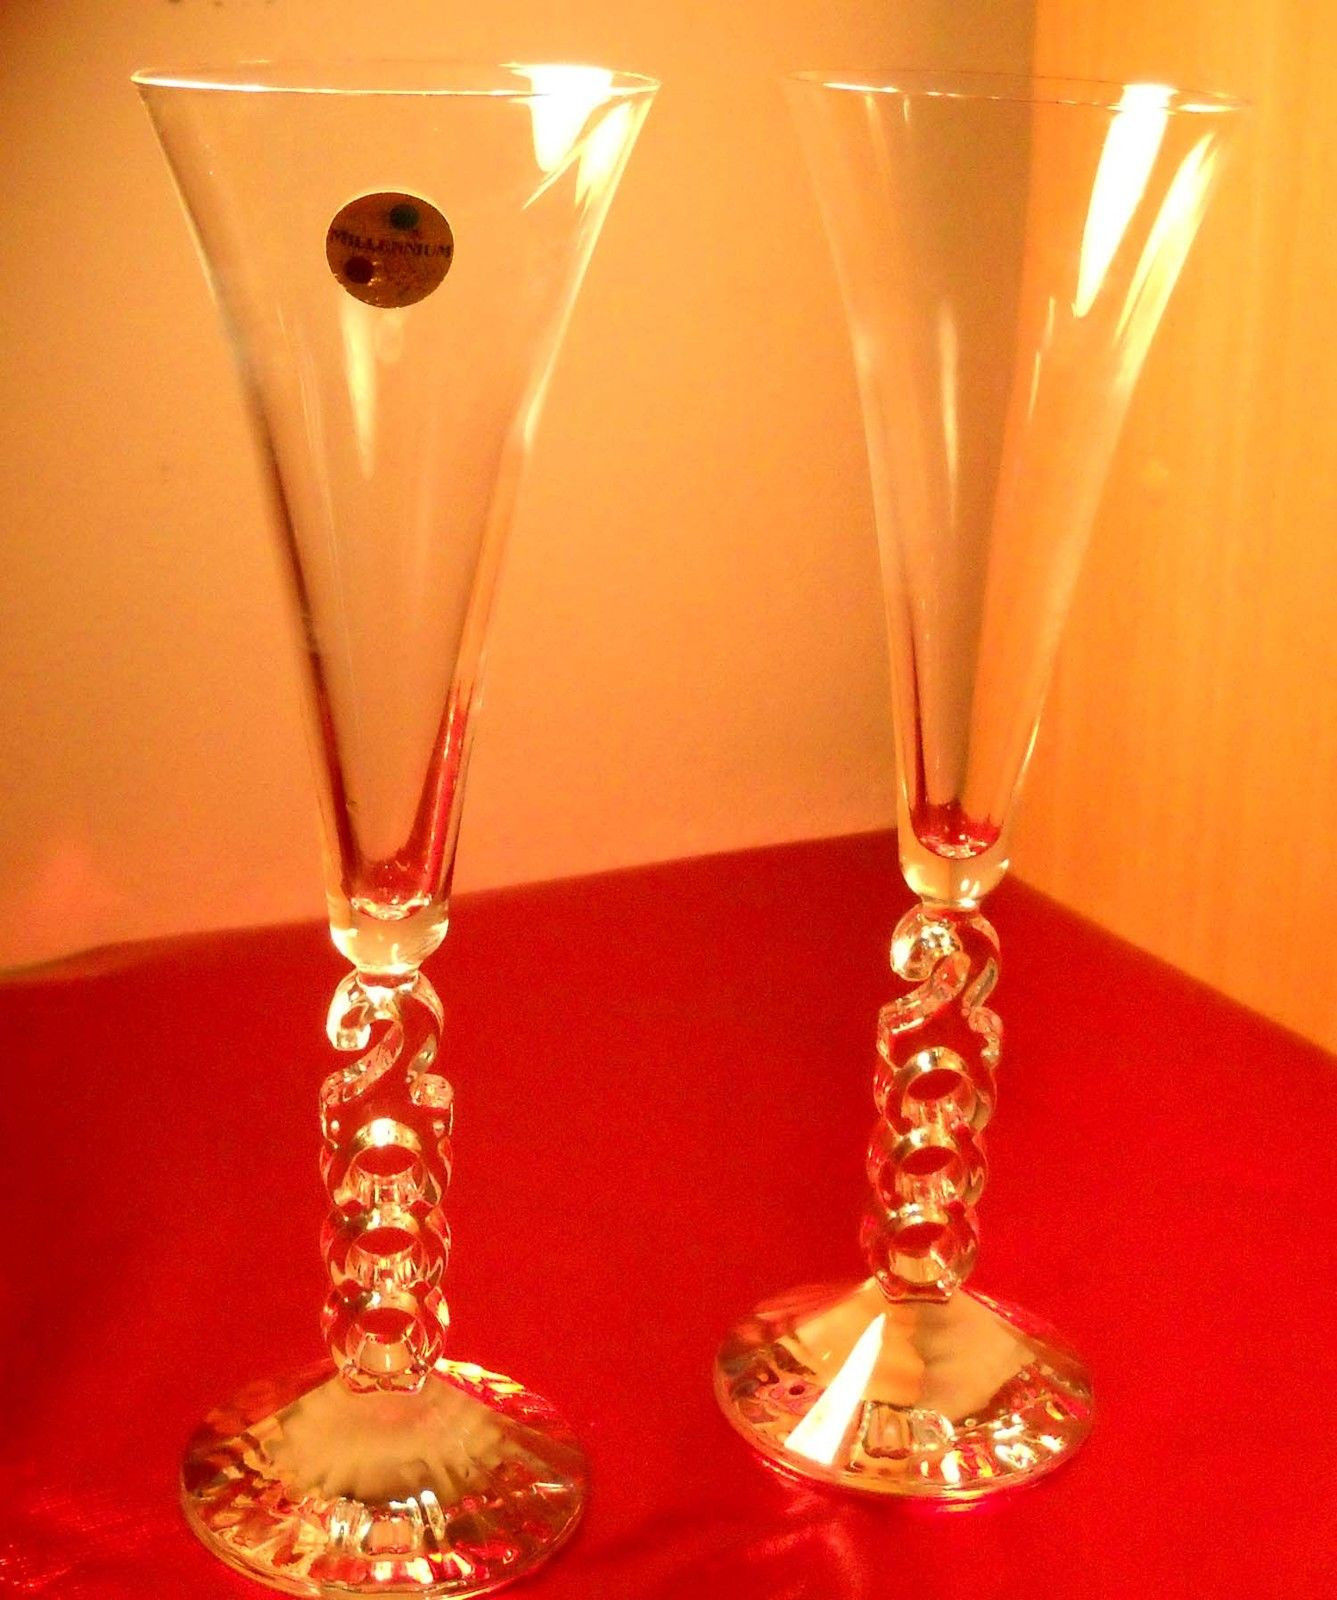 Cristal D Arques Vase Of Set Of 2 Millennium Crystal Champagne Wine Glasses Cristal Darques Intended for Set Of 2 Millennium Crystal Champagne Wine Glasses Cristal Darques France Ebay